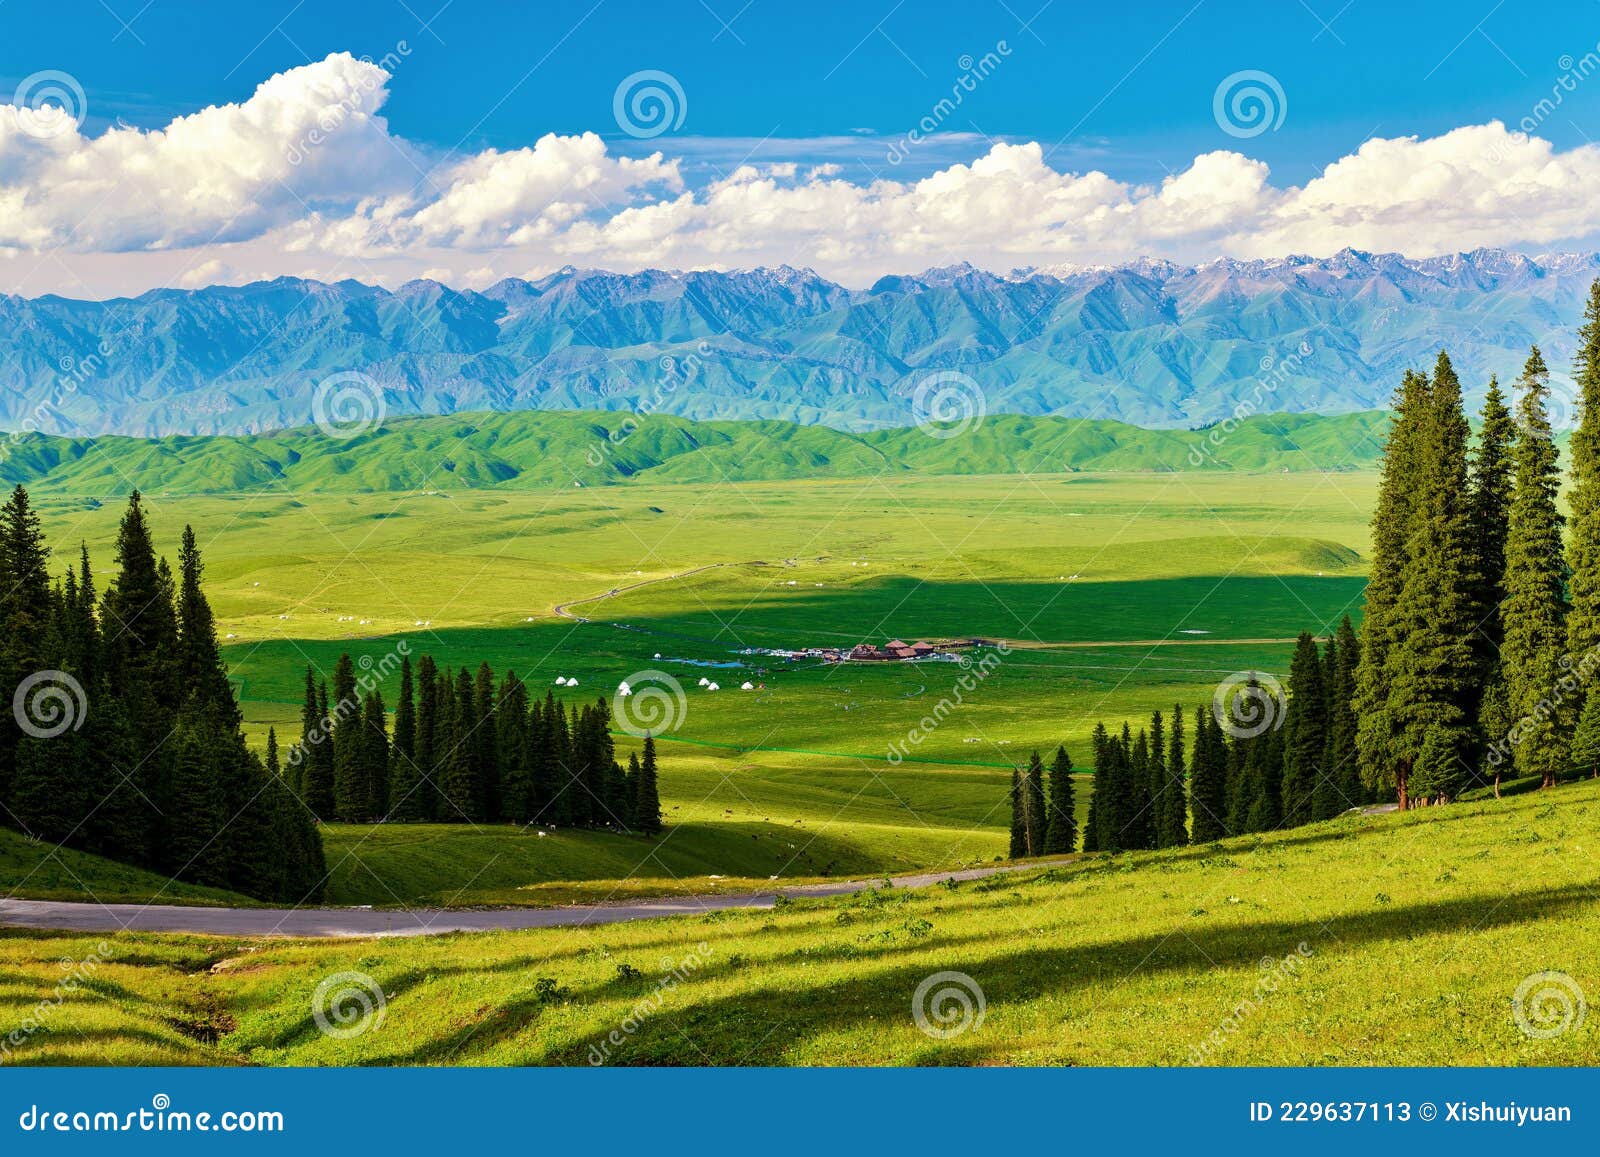 the picea schrenkiana in the high mountain meadow of nalati grassland